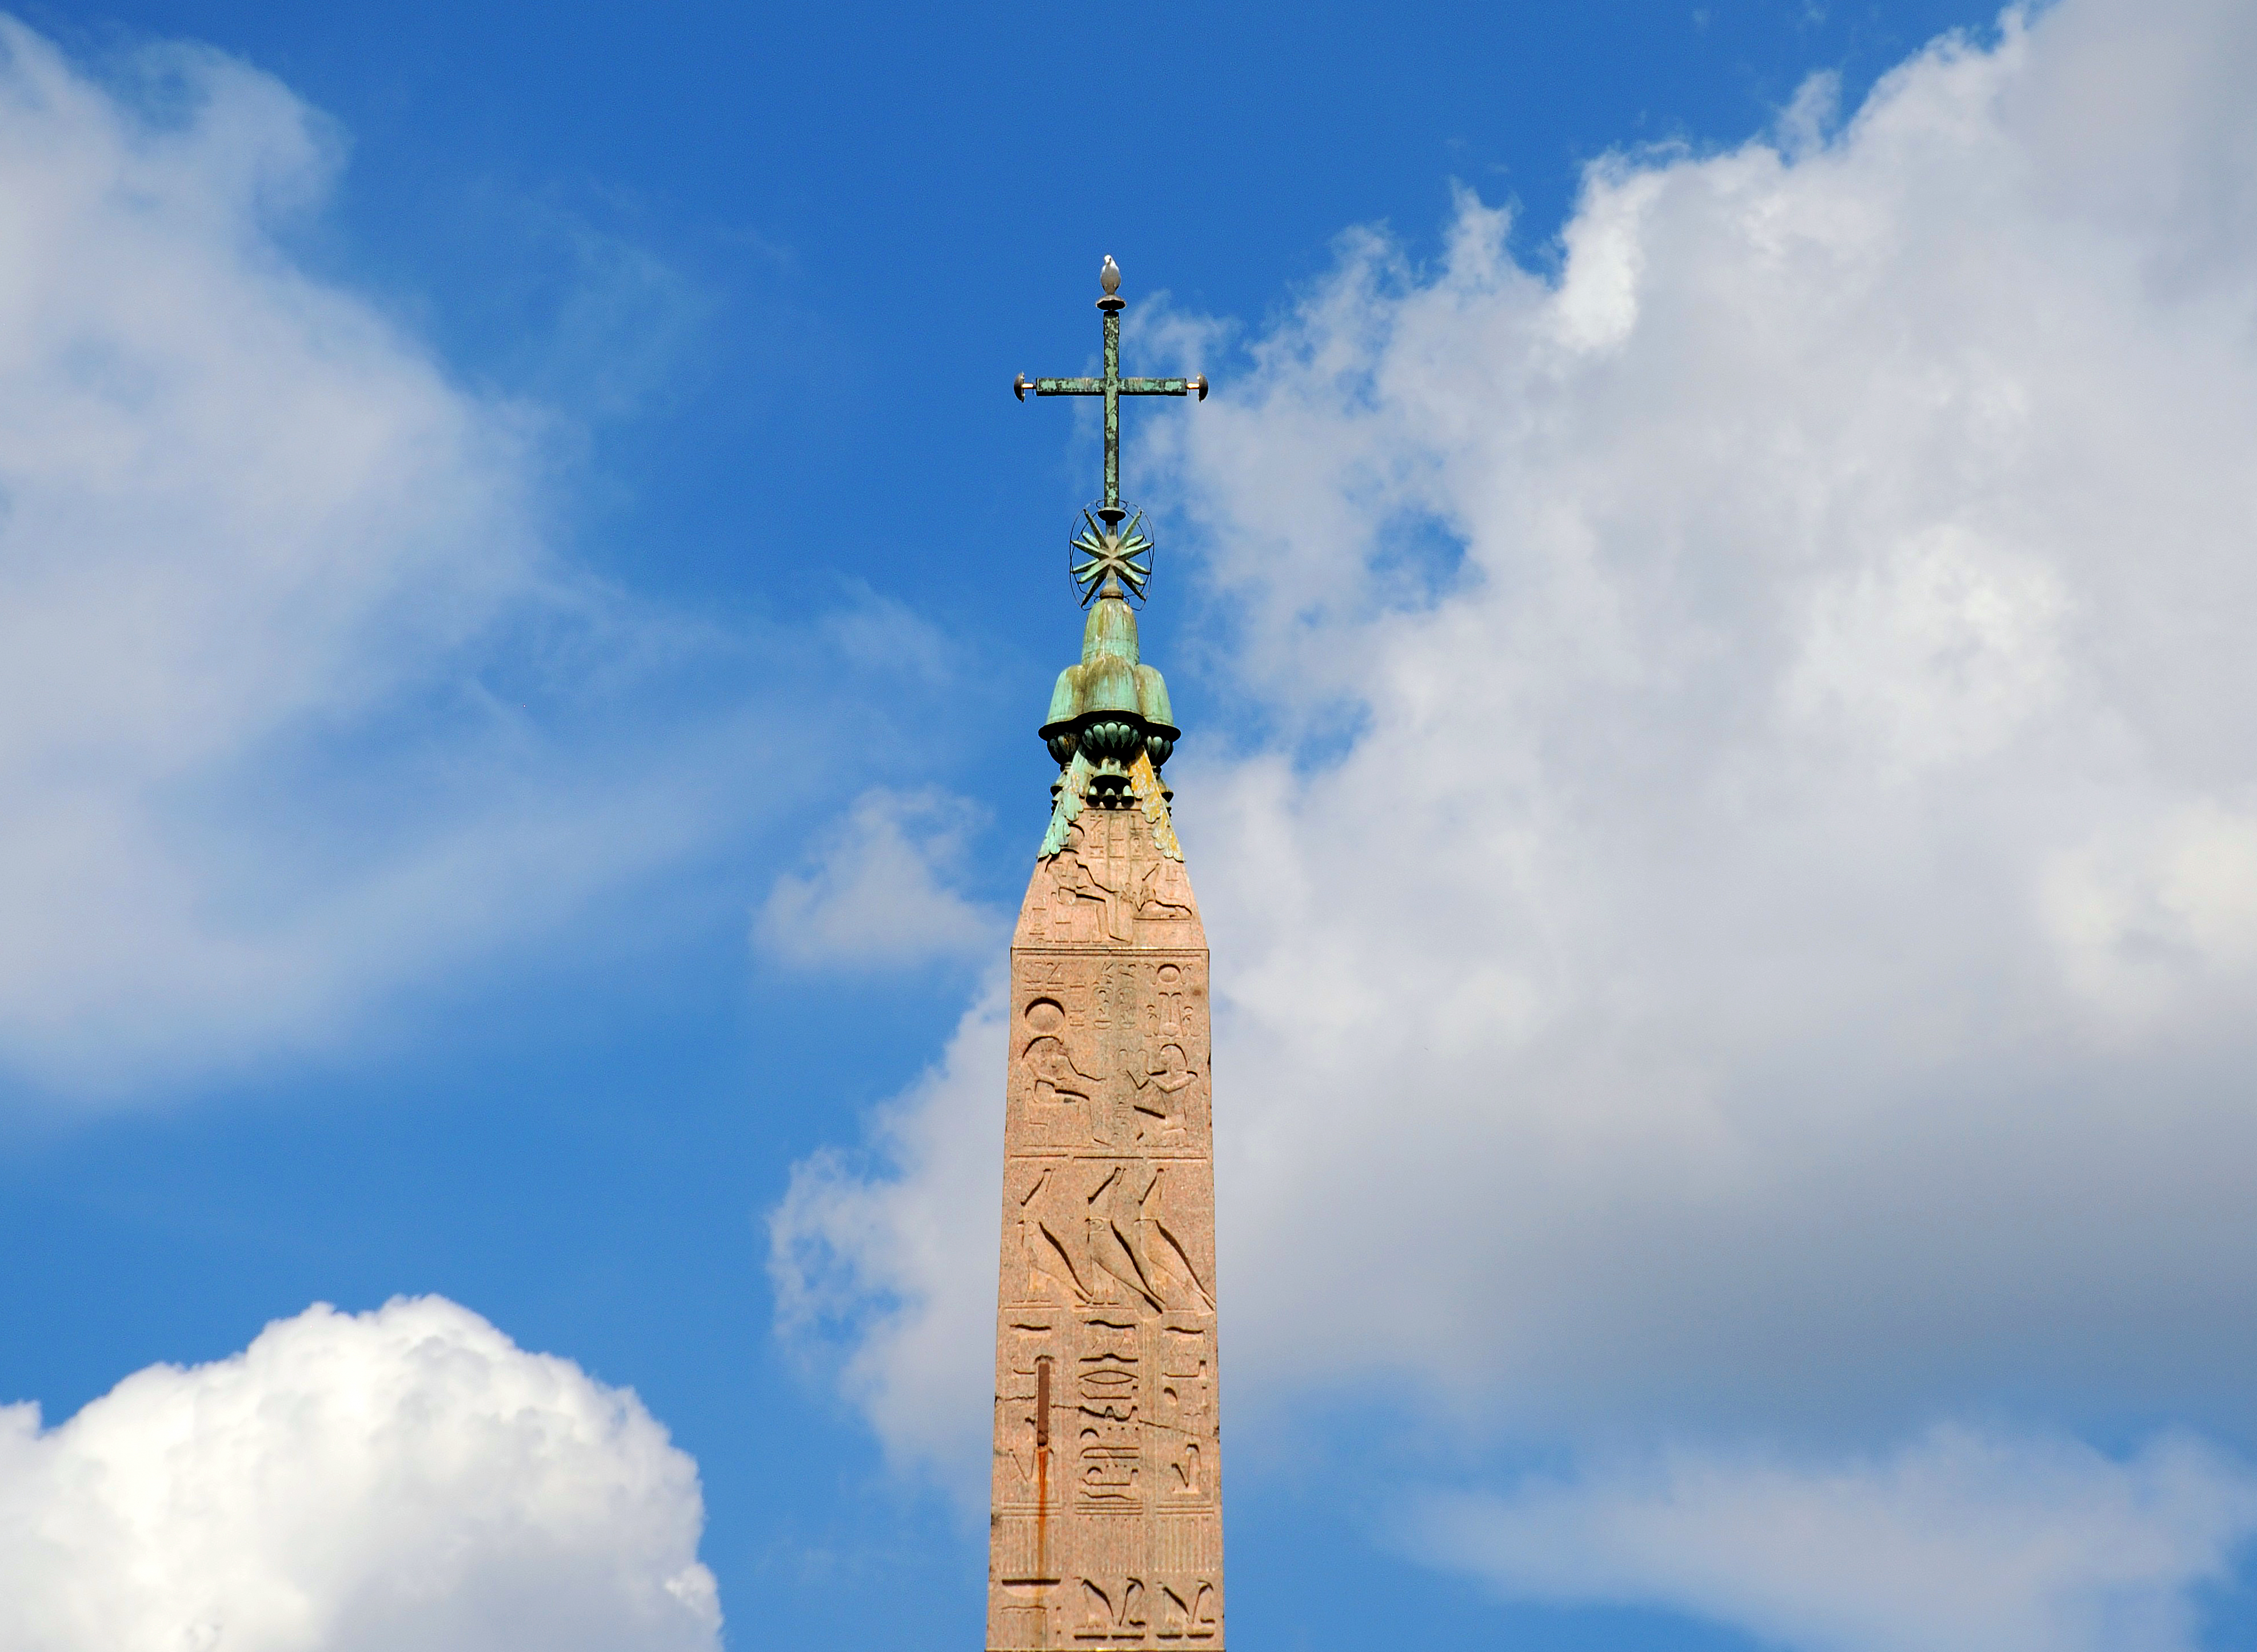 Tip of Flaminio Obelisk